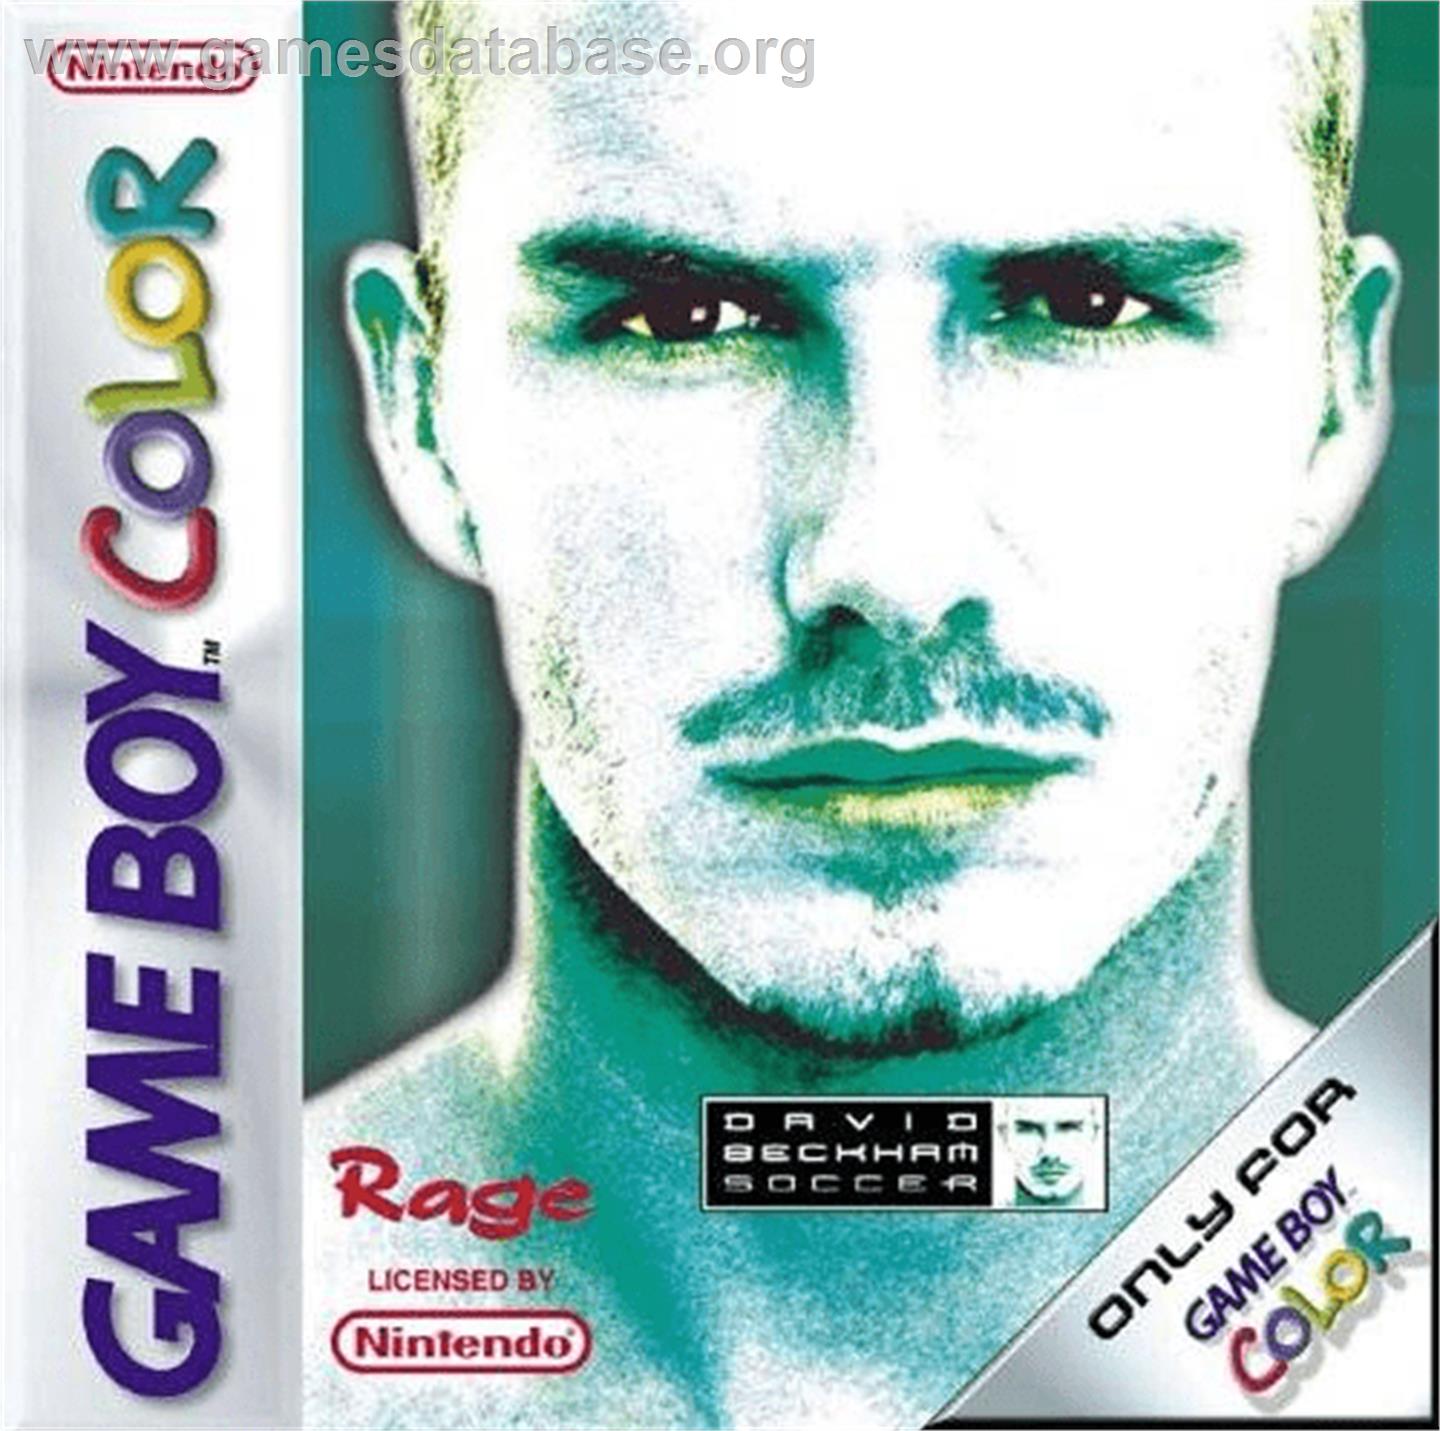 David Beckham Soccer - Nintendo Game Boy Color - Artwork - Box